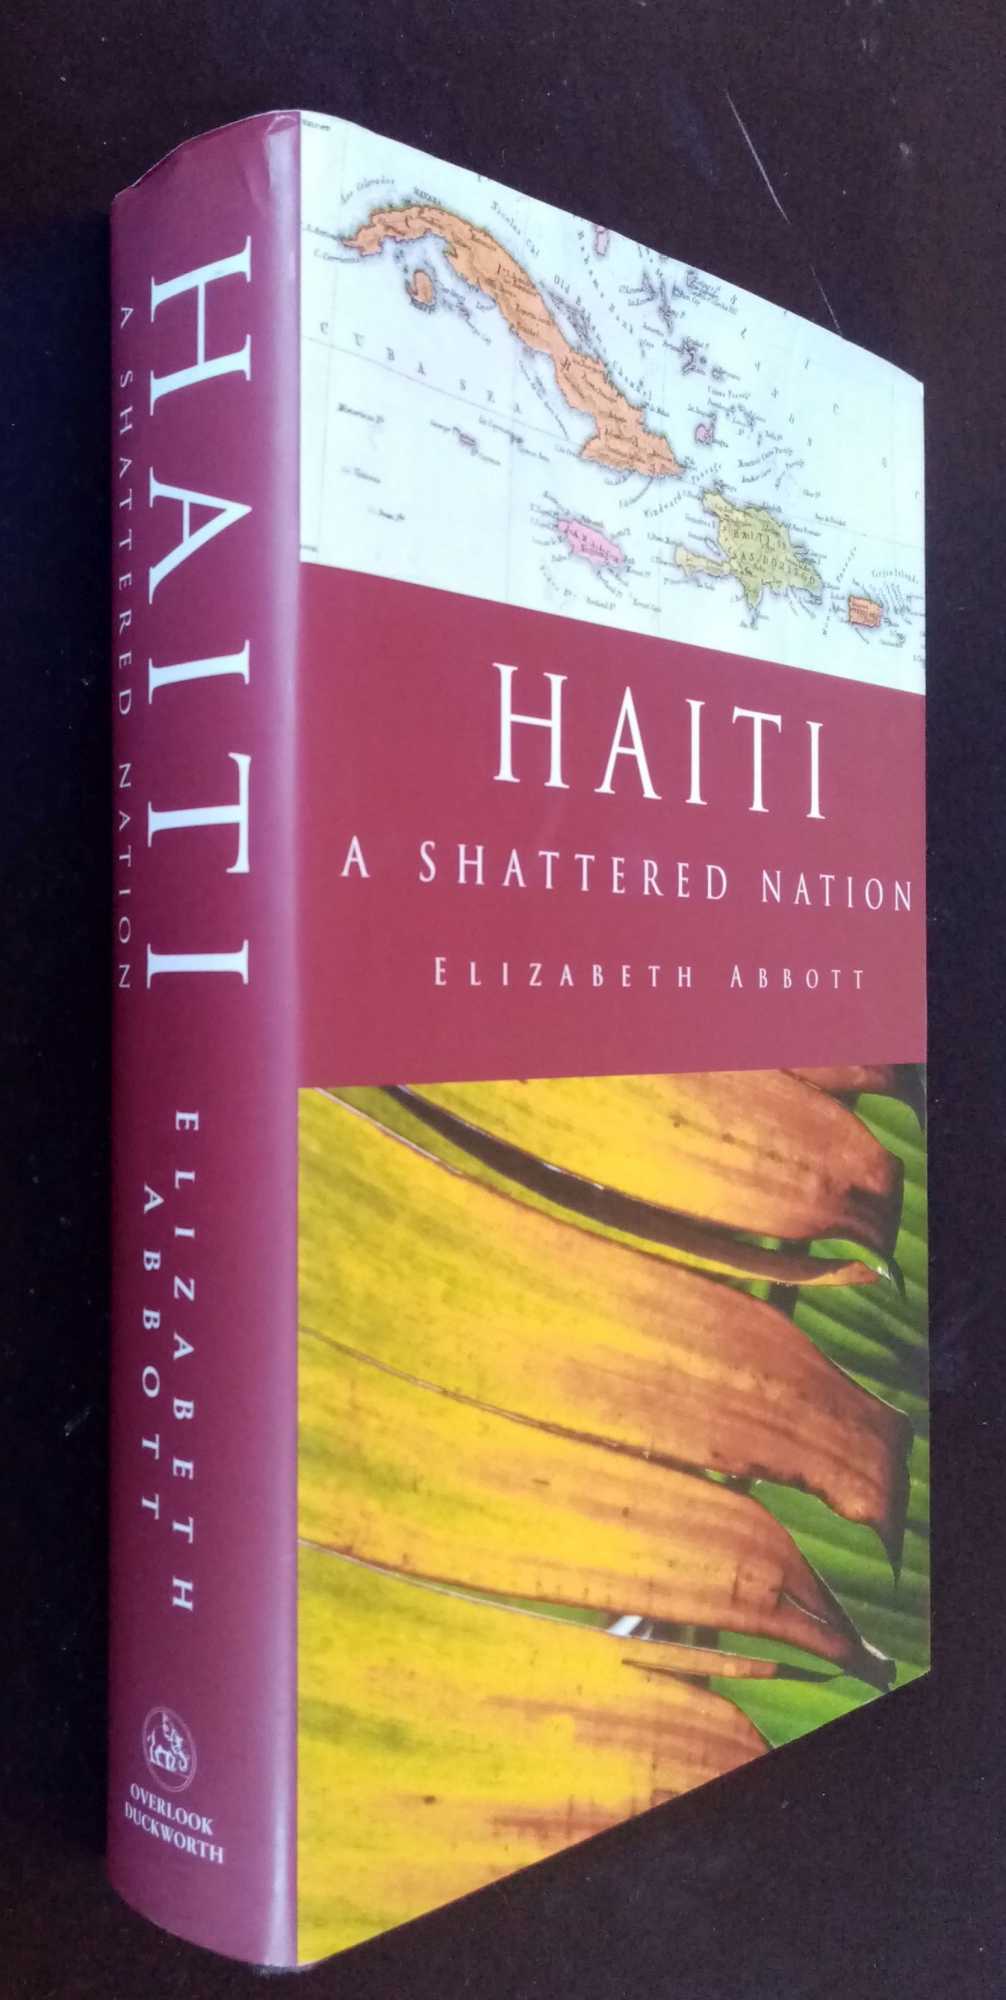 Elizabeth Abbott - Haiti - A Shattered nation